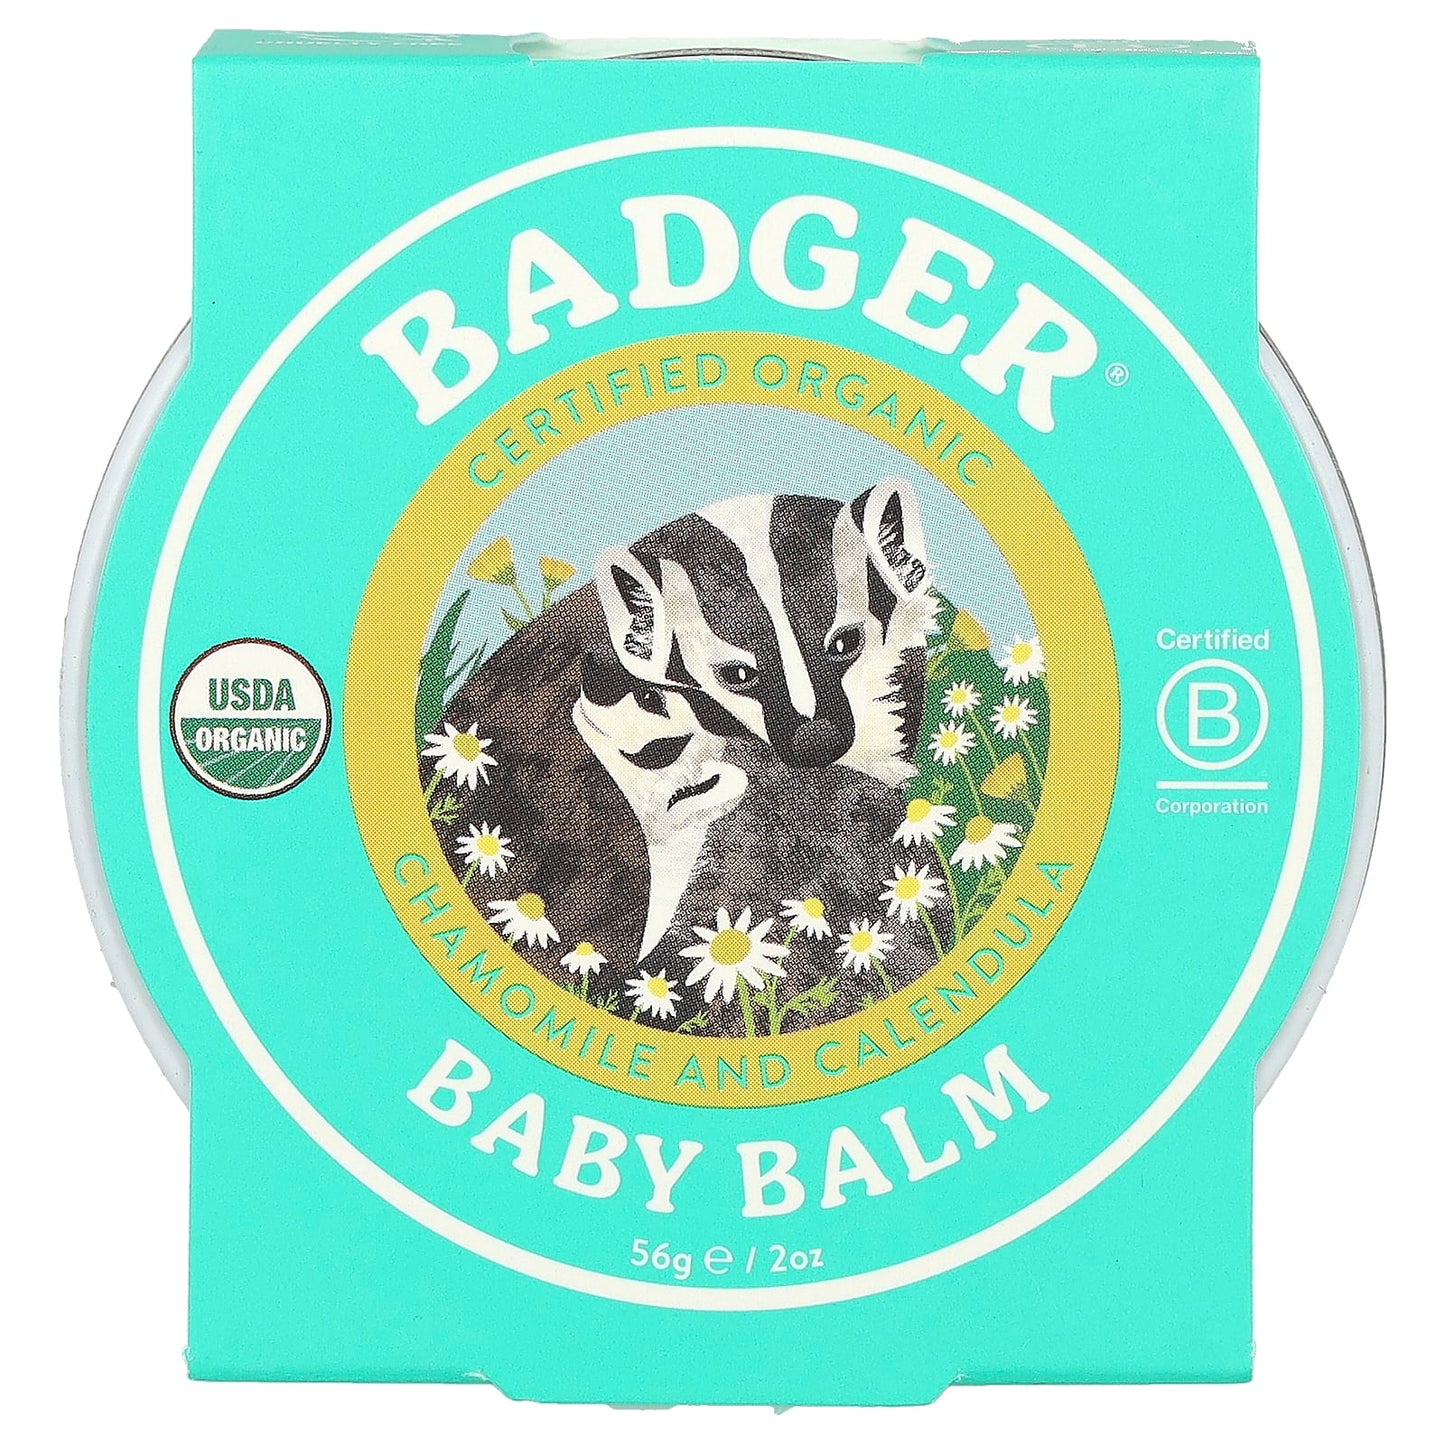 Badger Company, Organic Baby Balm, Chamomile and Calendula, 2 oz (56 g)